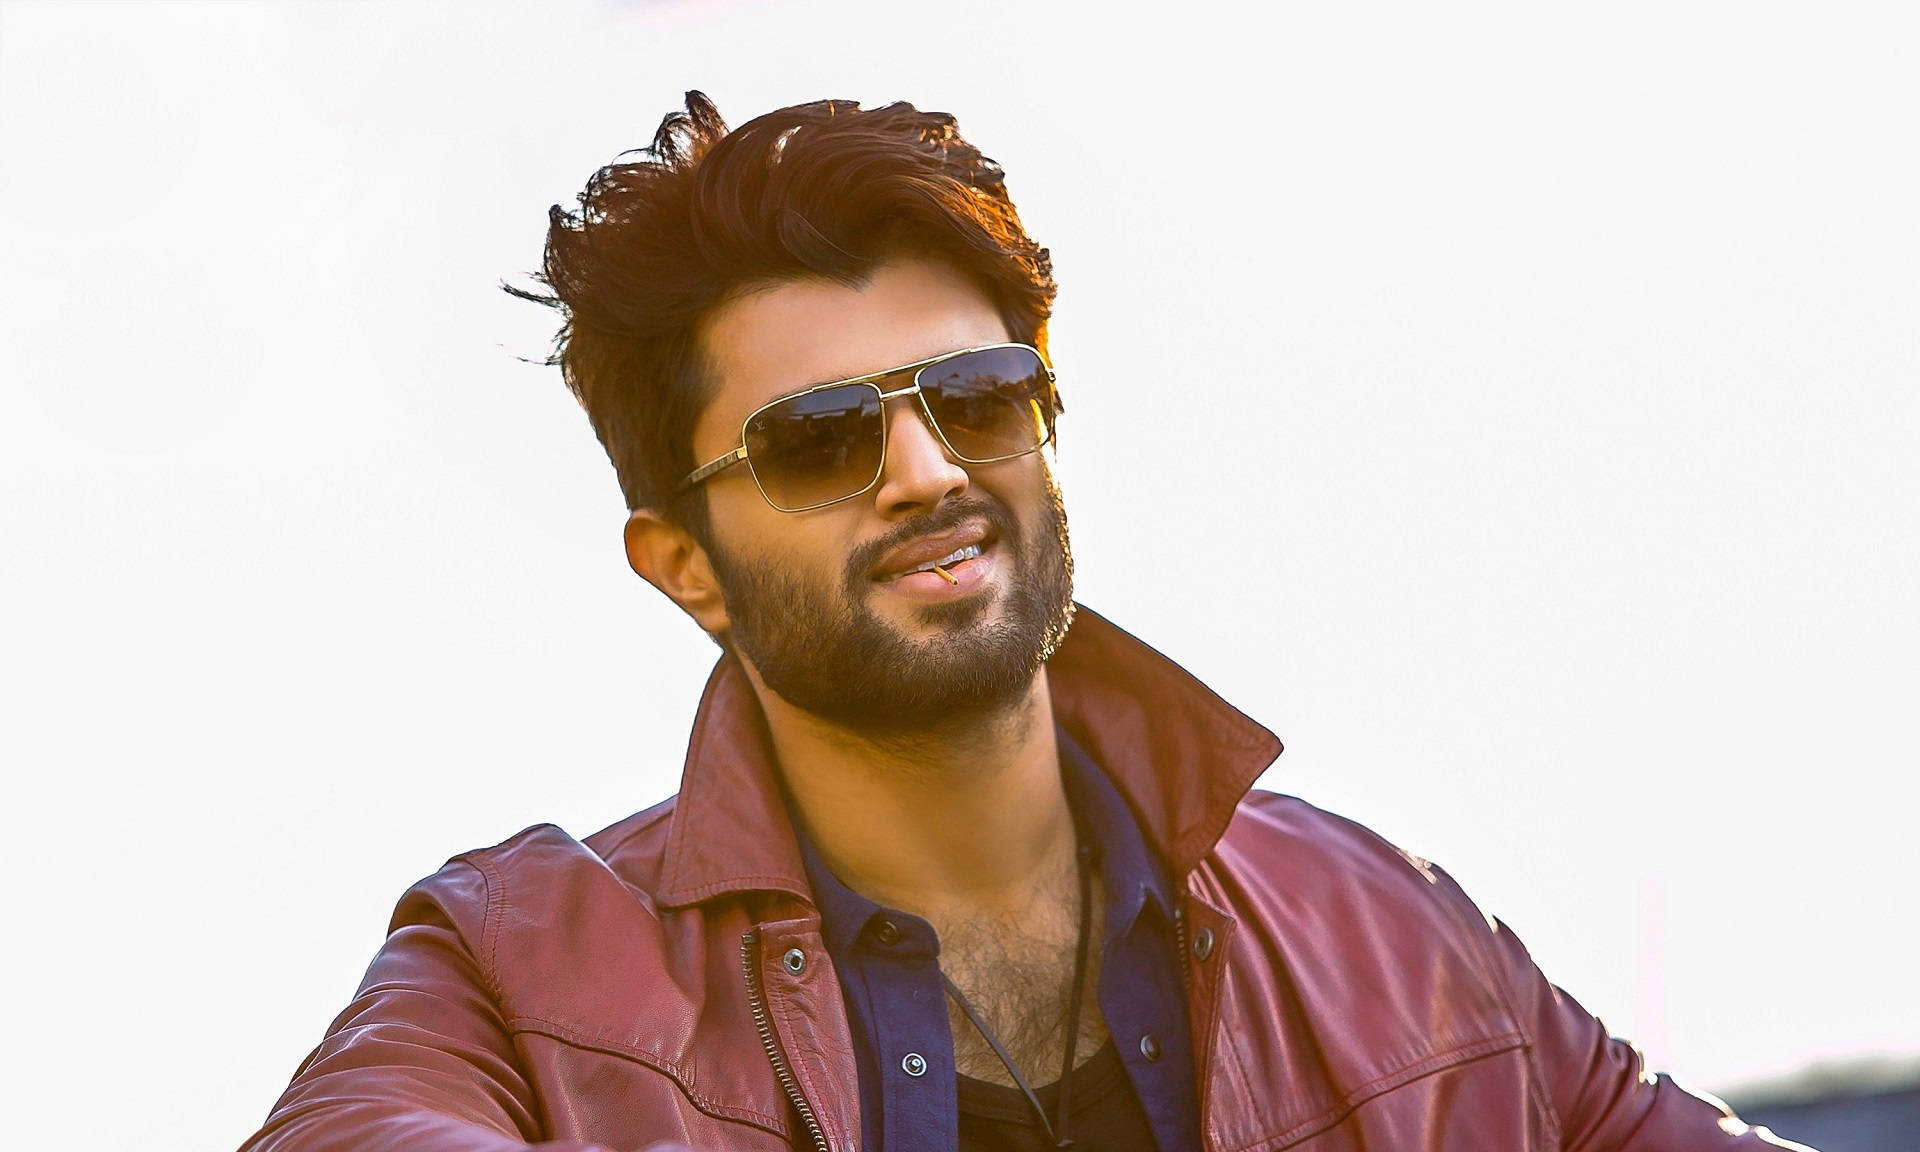 Vijay Hd In Sunglasses Wallpaper